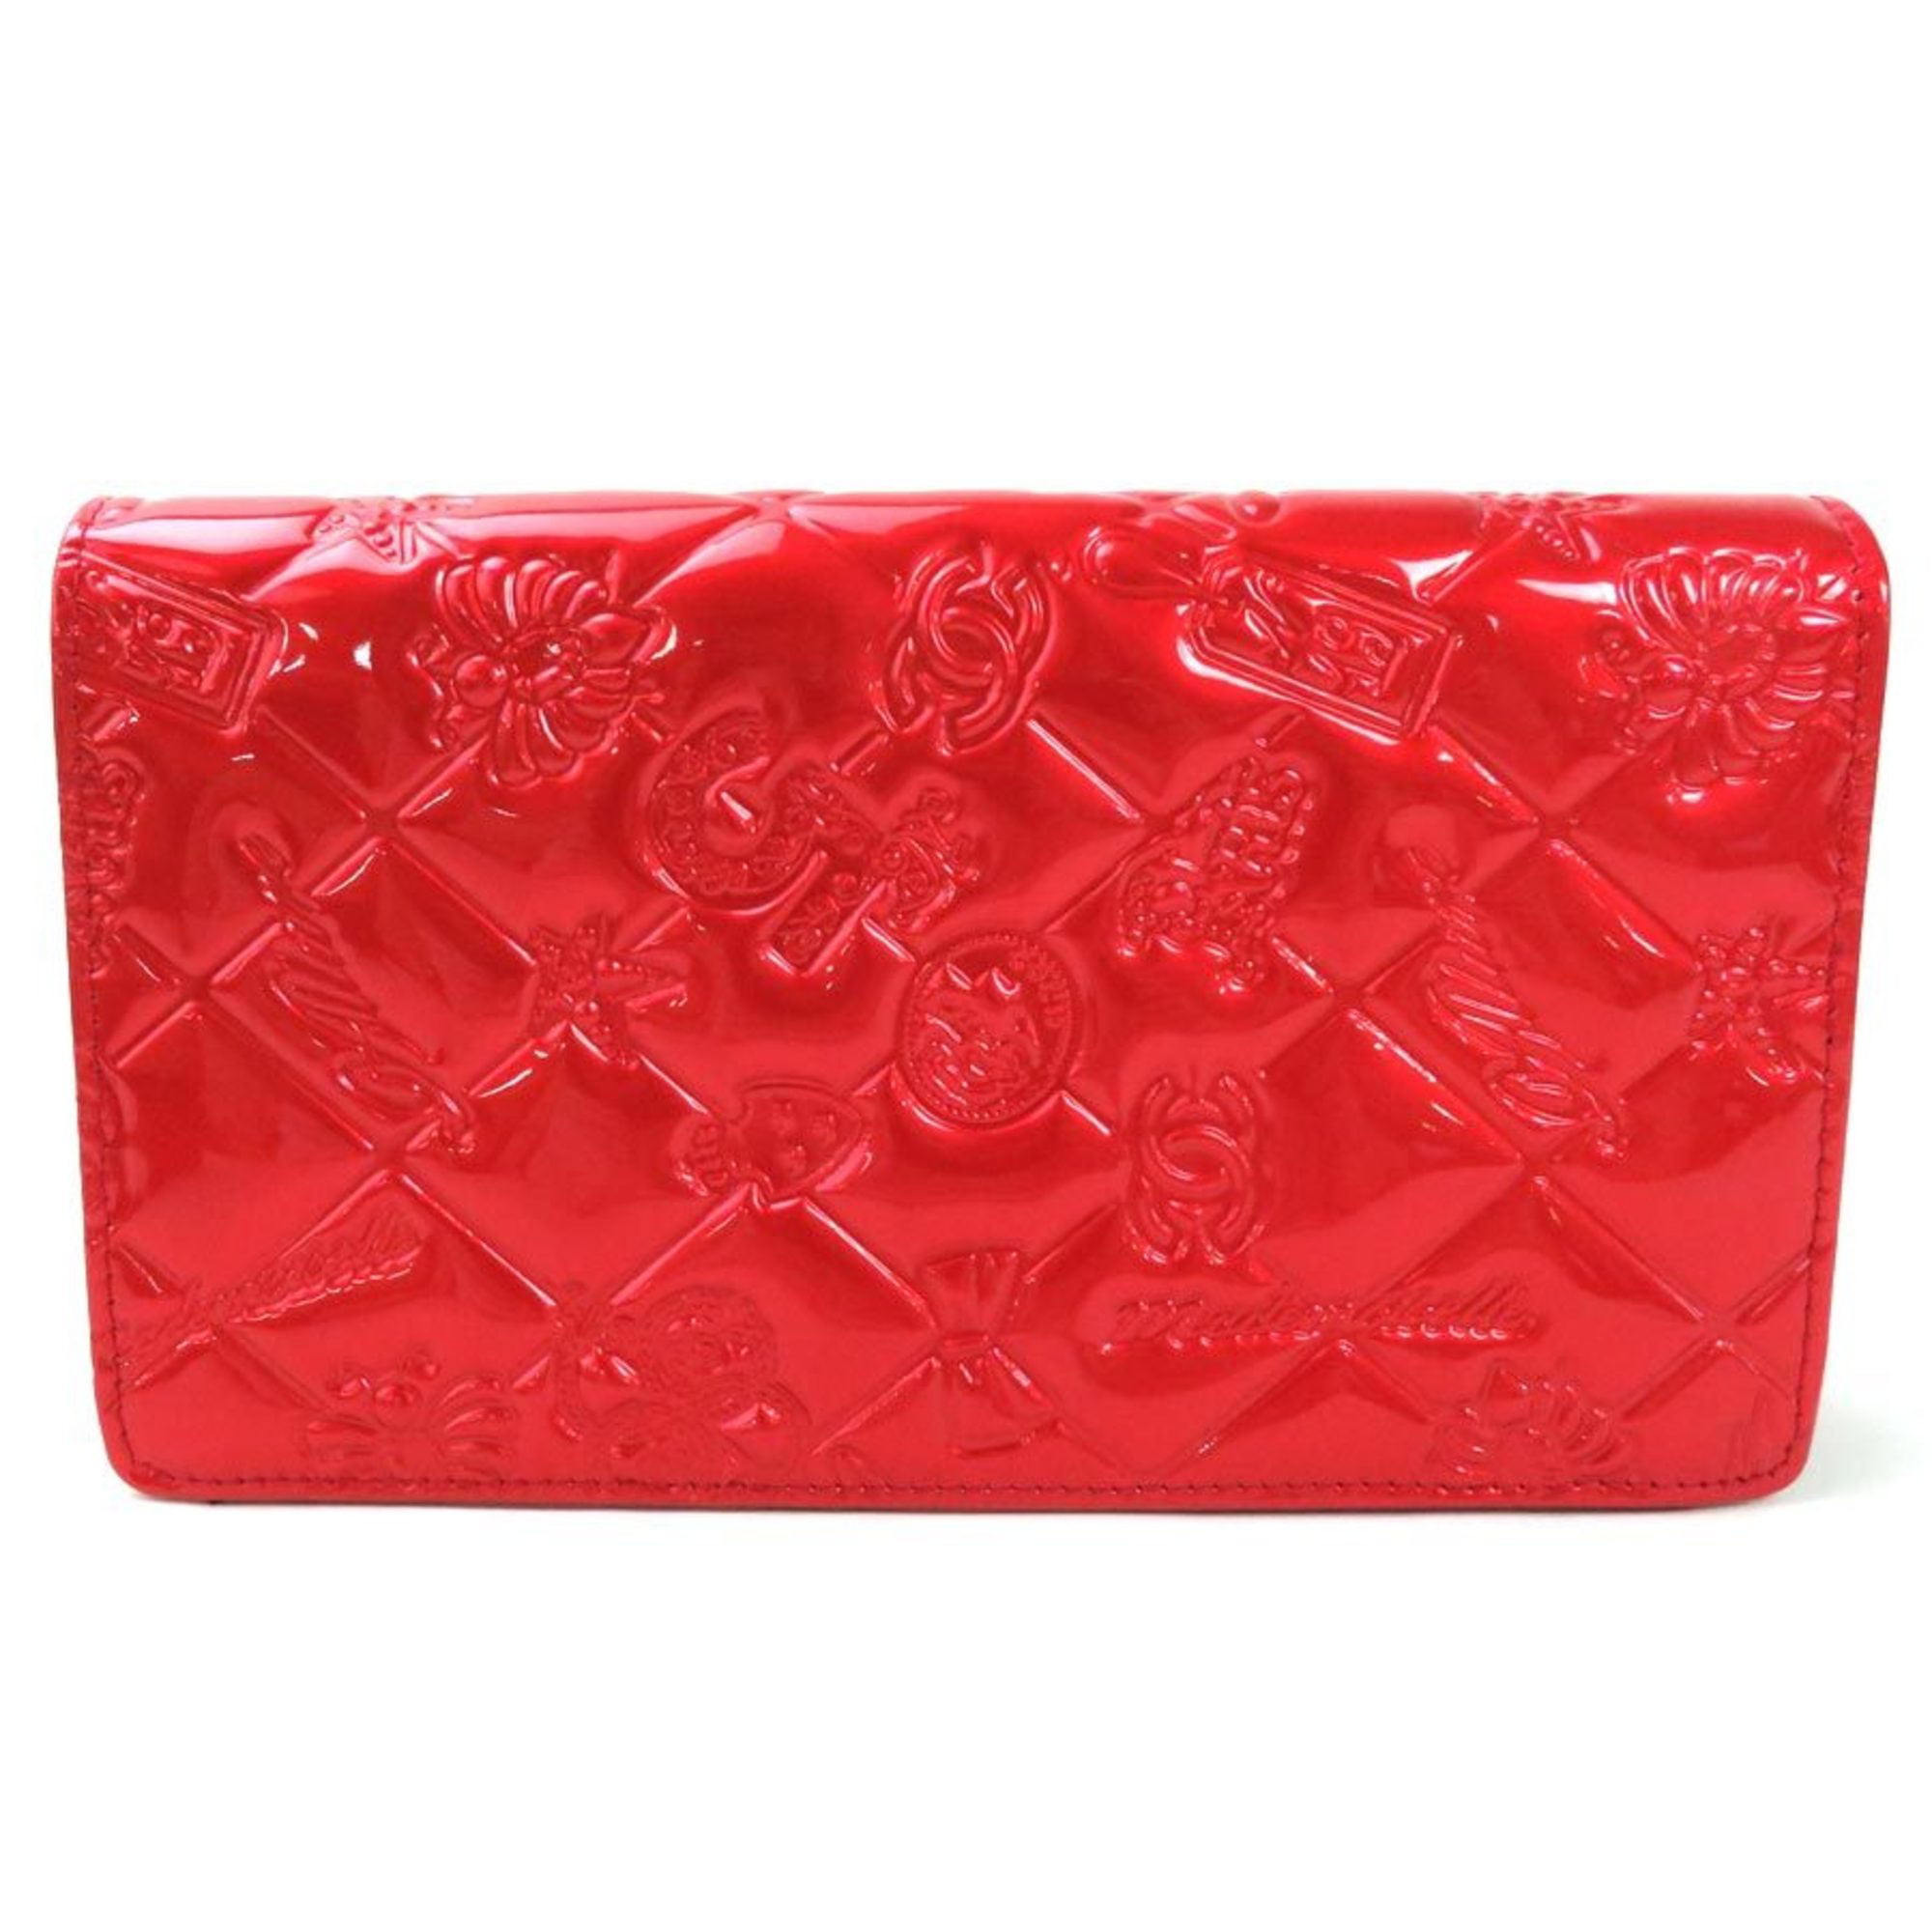 Louis Vuitton, Bags, Red Patent Leather Louis Vuitton Wallet